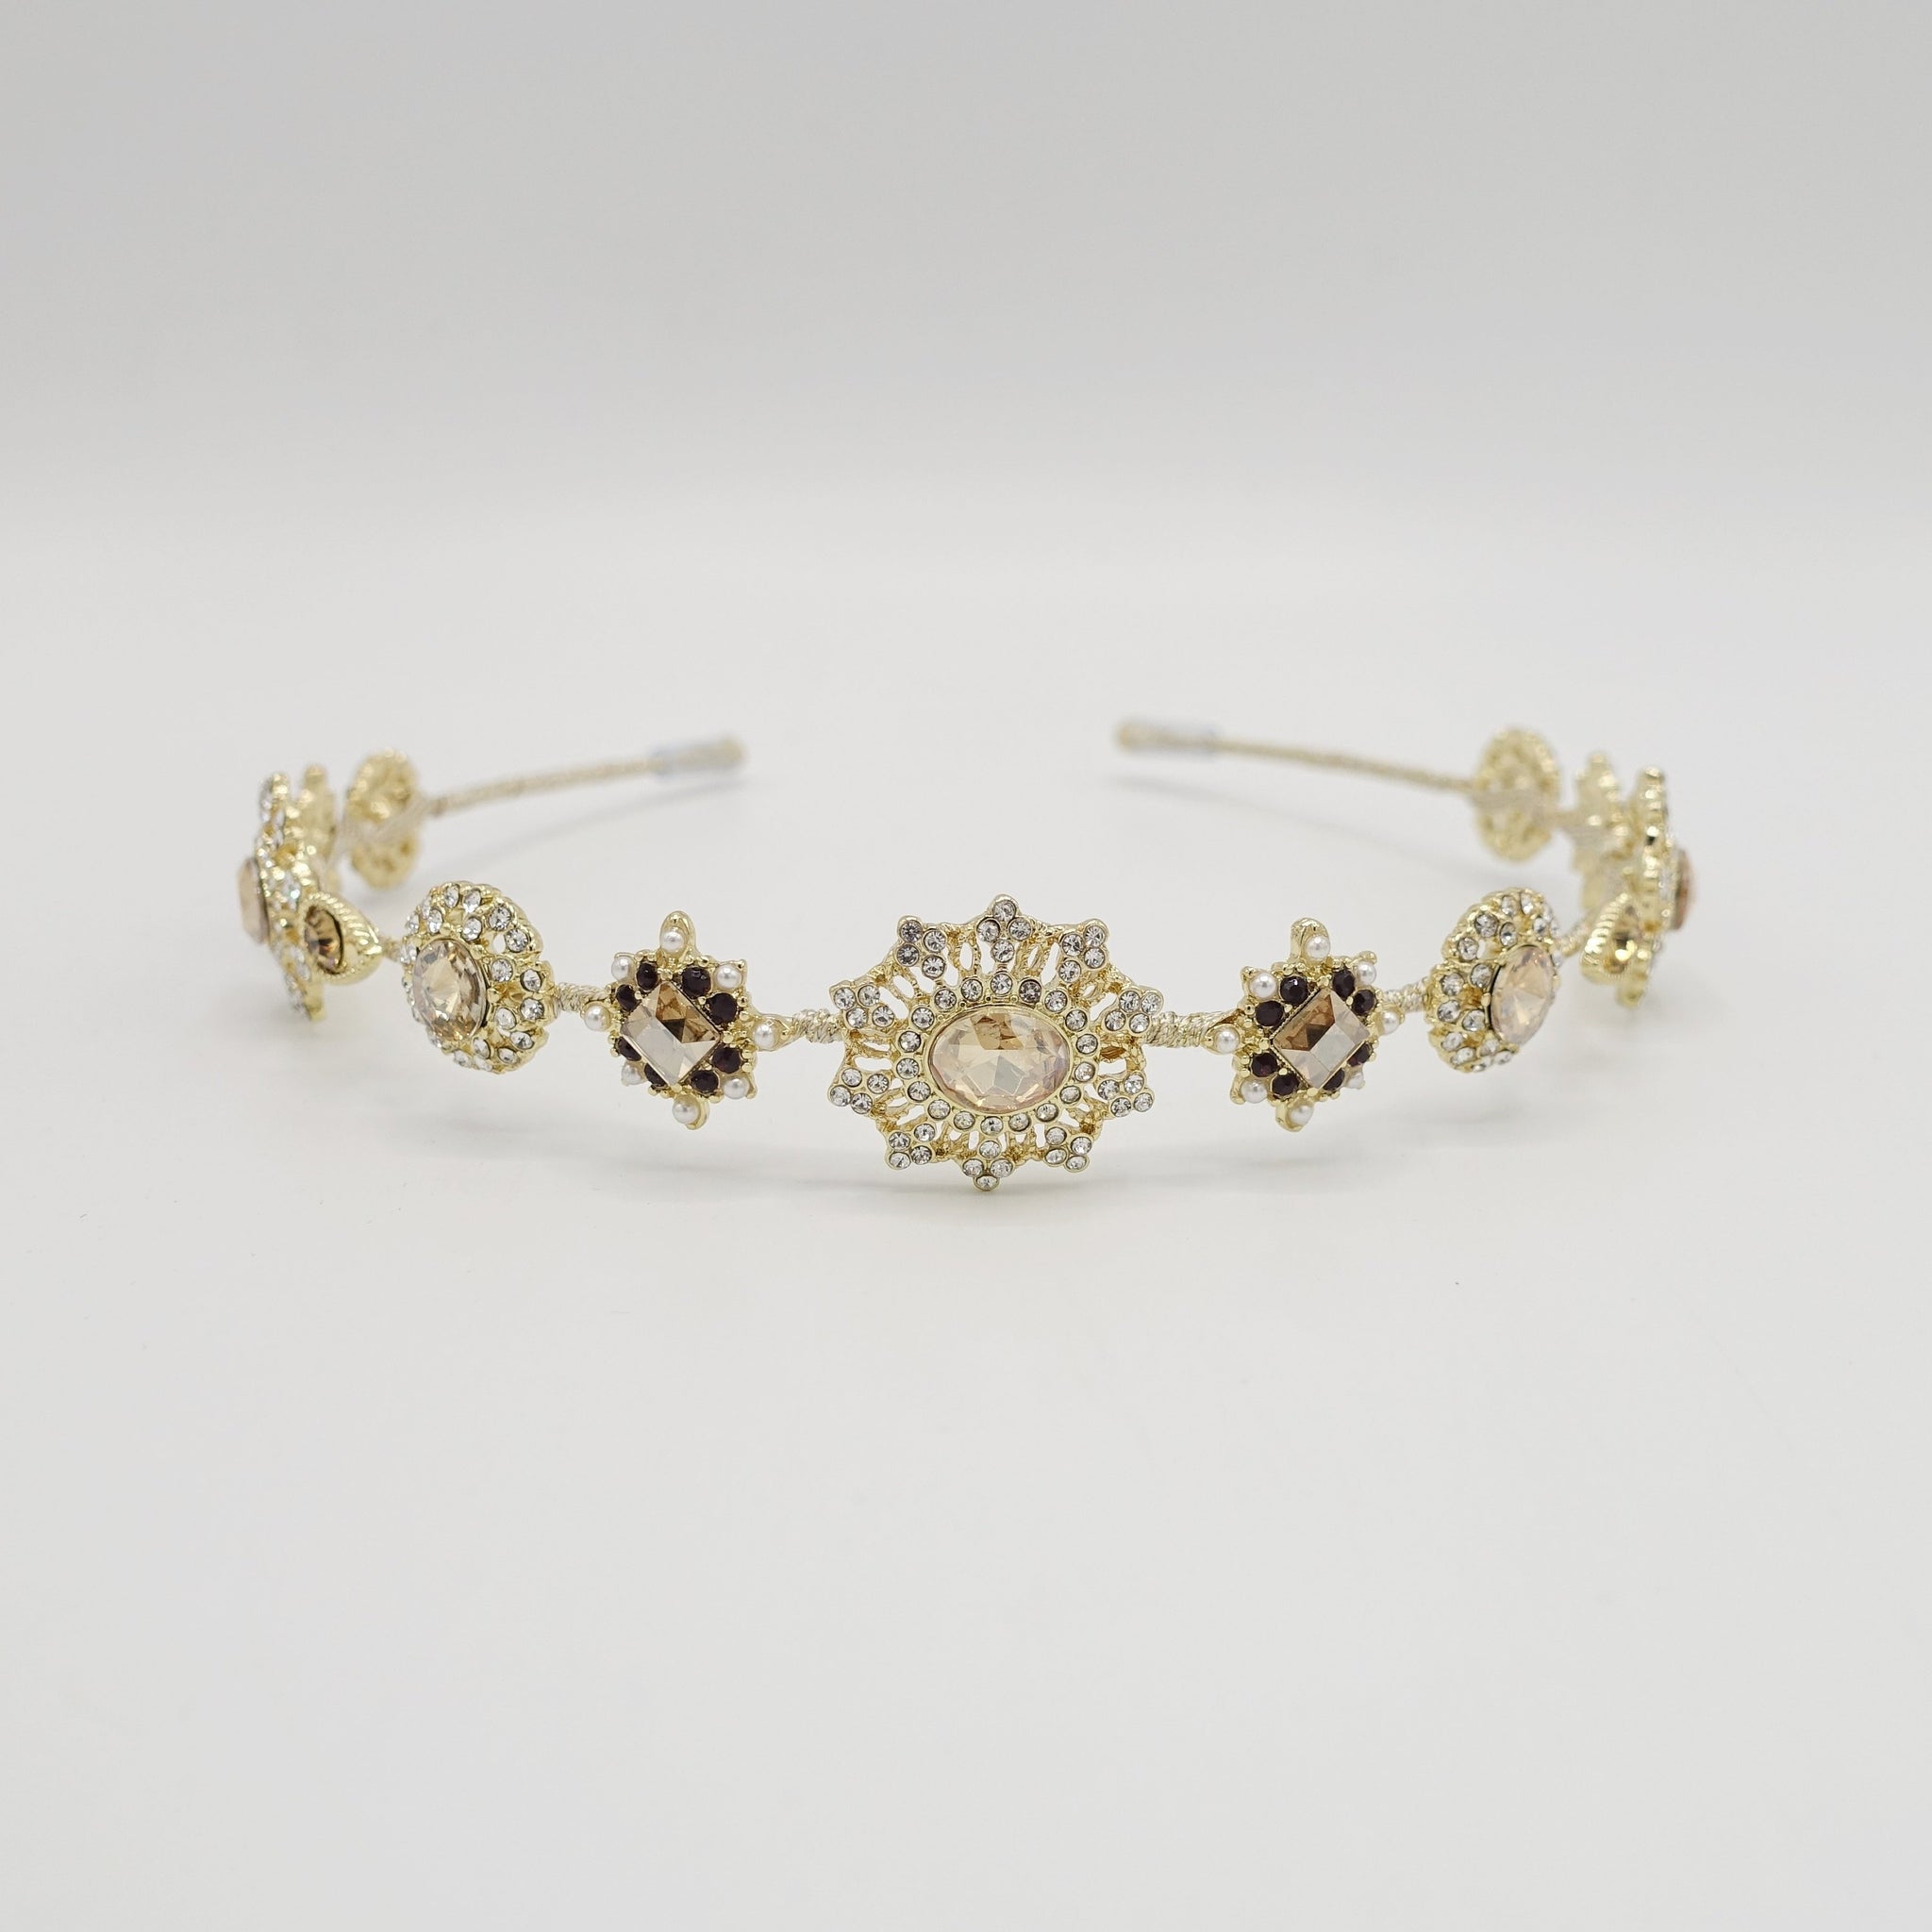 VeryShine Headband Gold beige baroque pattern rhinestone embellished metal thin headband